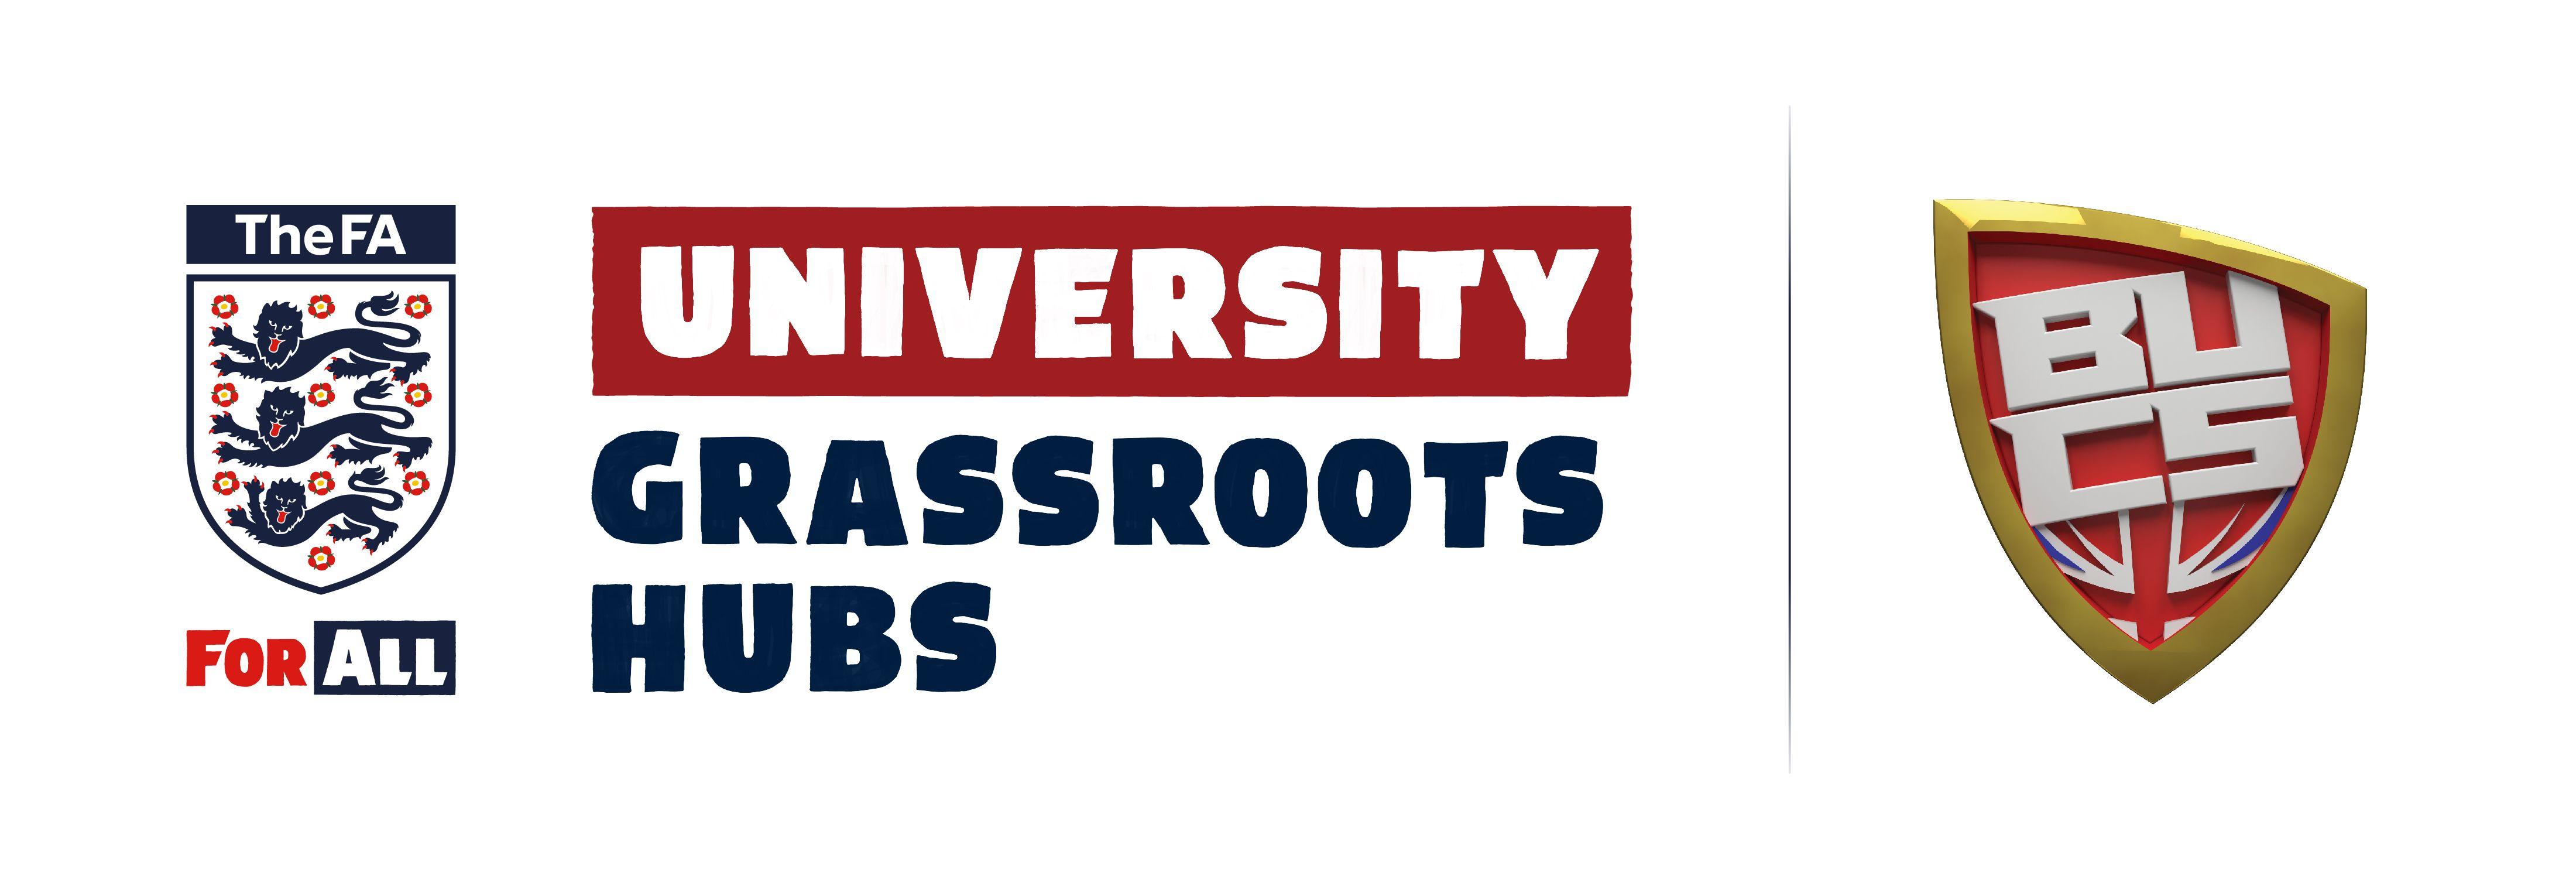 Bucs Logo - University Grassroots Hubs with FA logo & BUCS logo